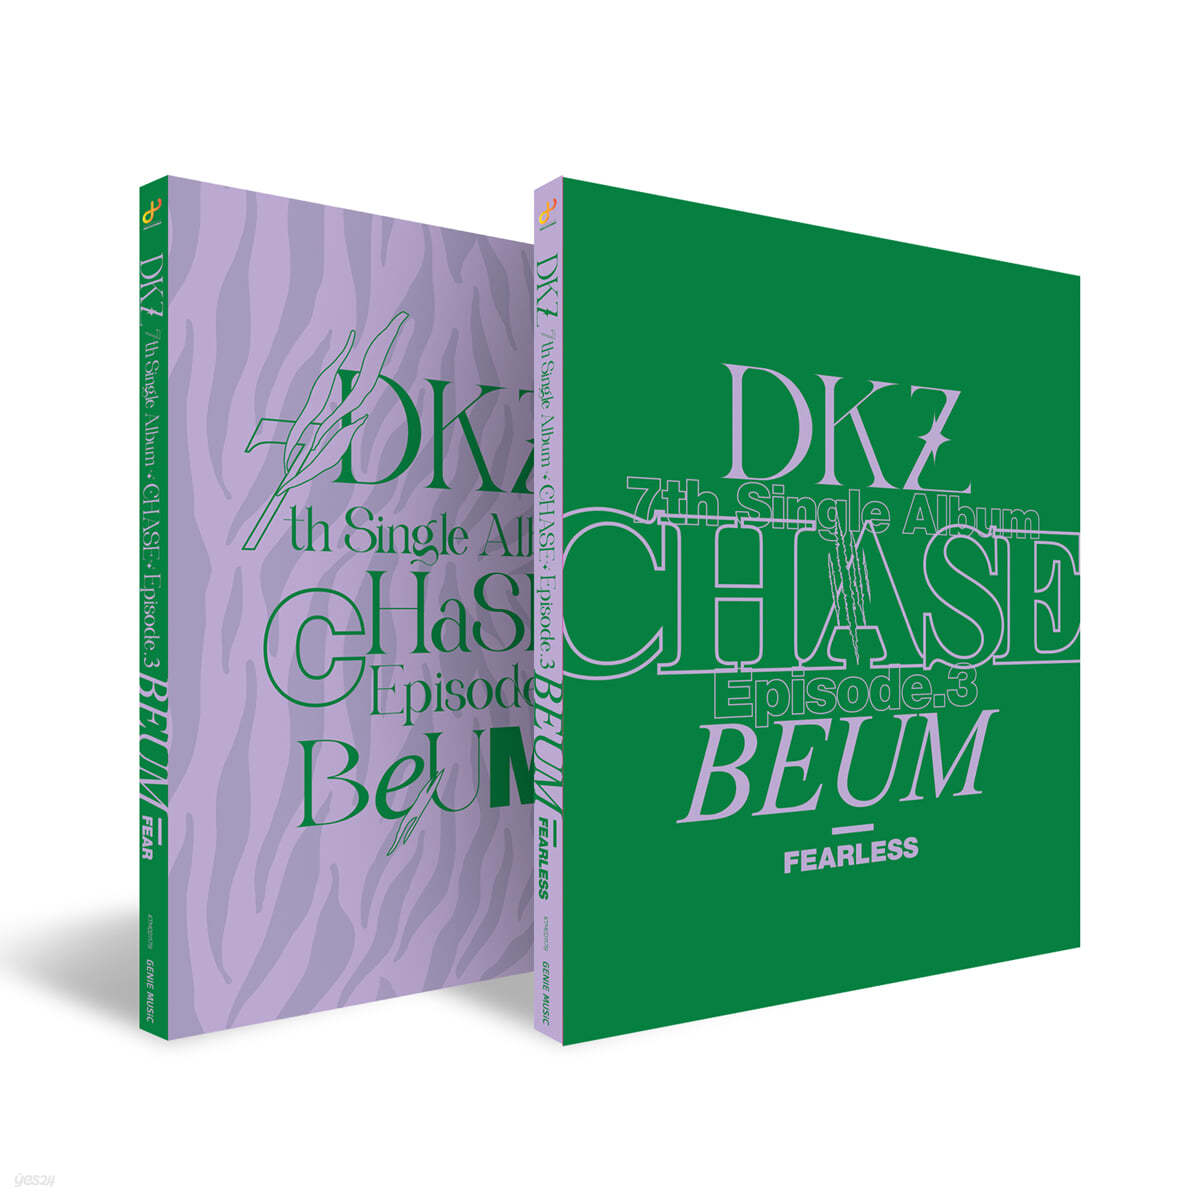 DKZ (디케이지) - CHASE EPISODE 3. BEUM [FEARLESS ver.]